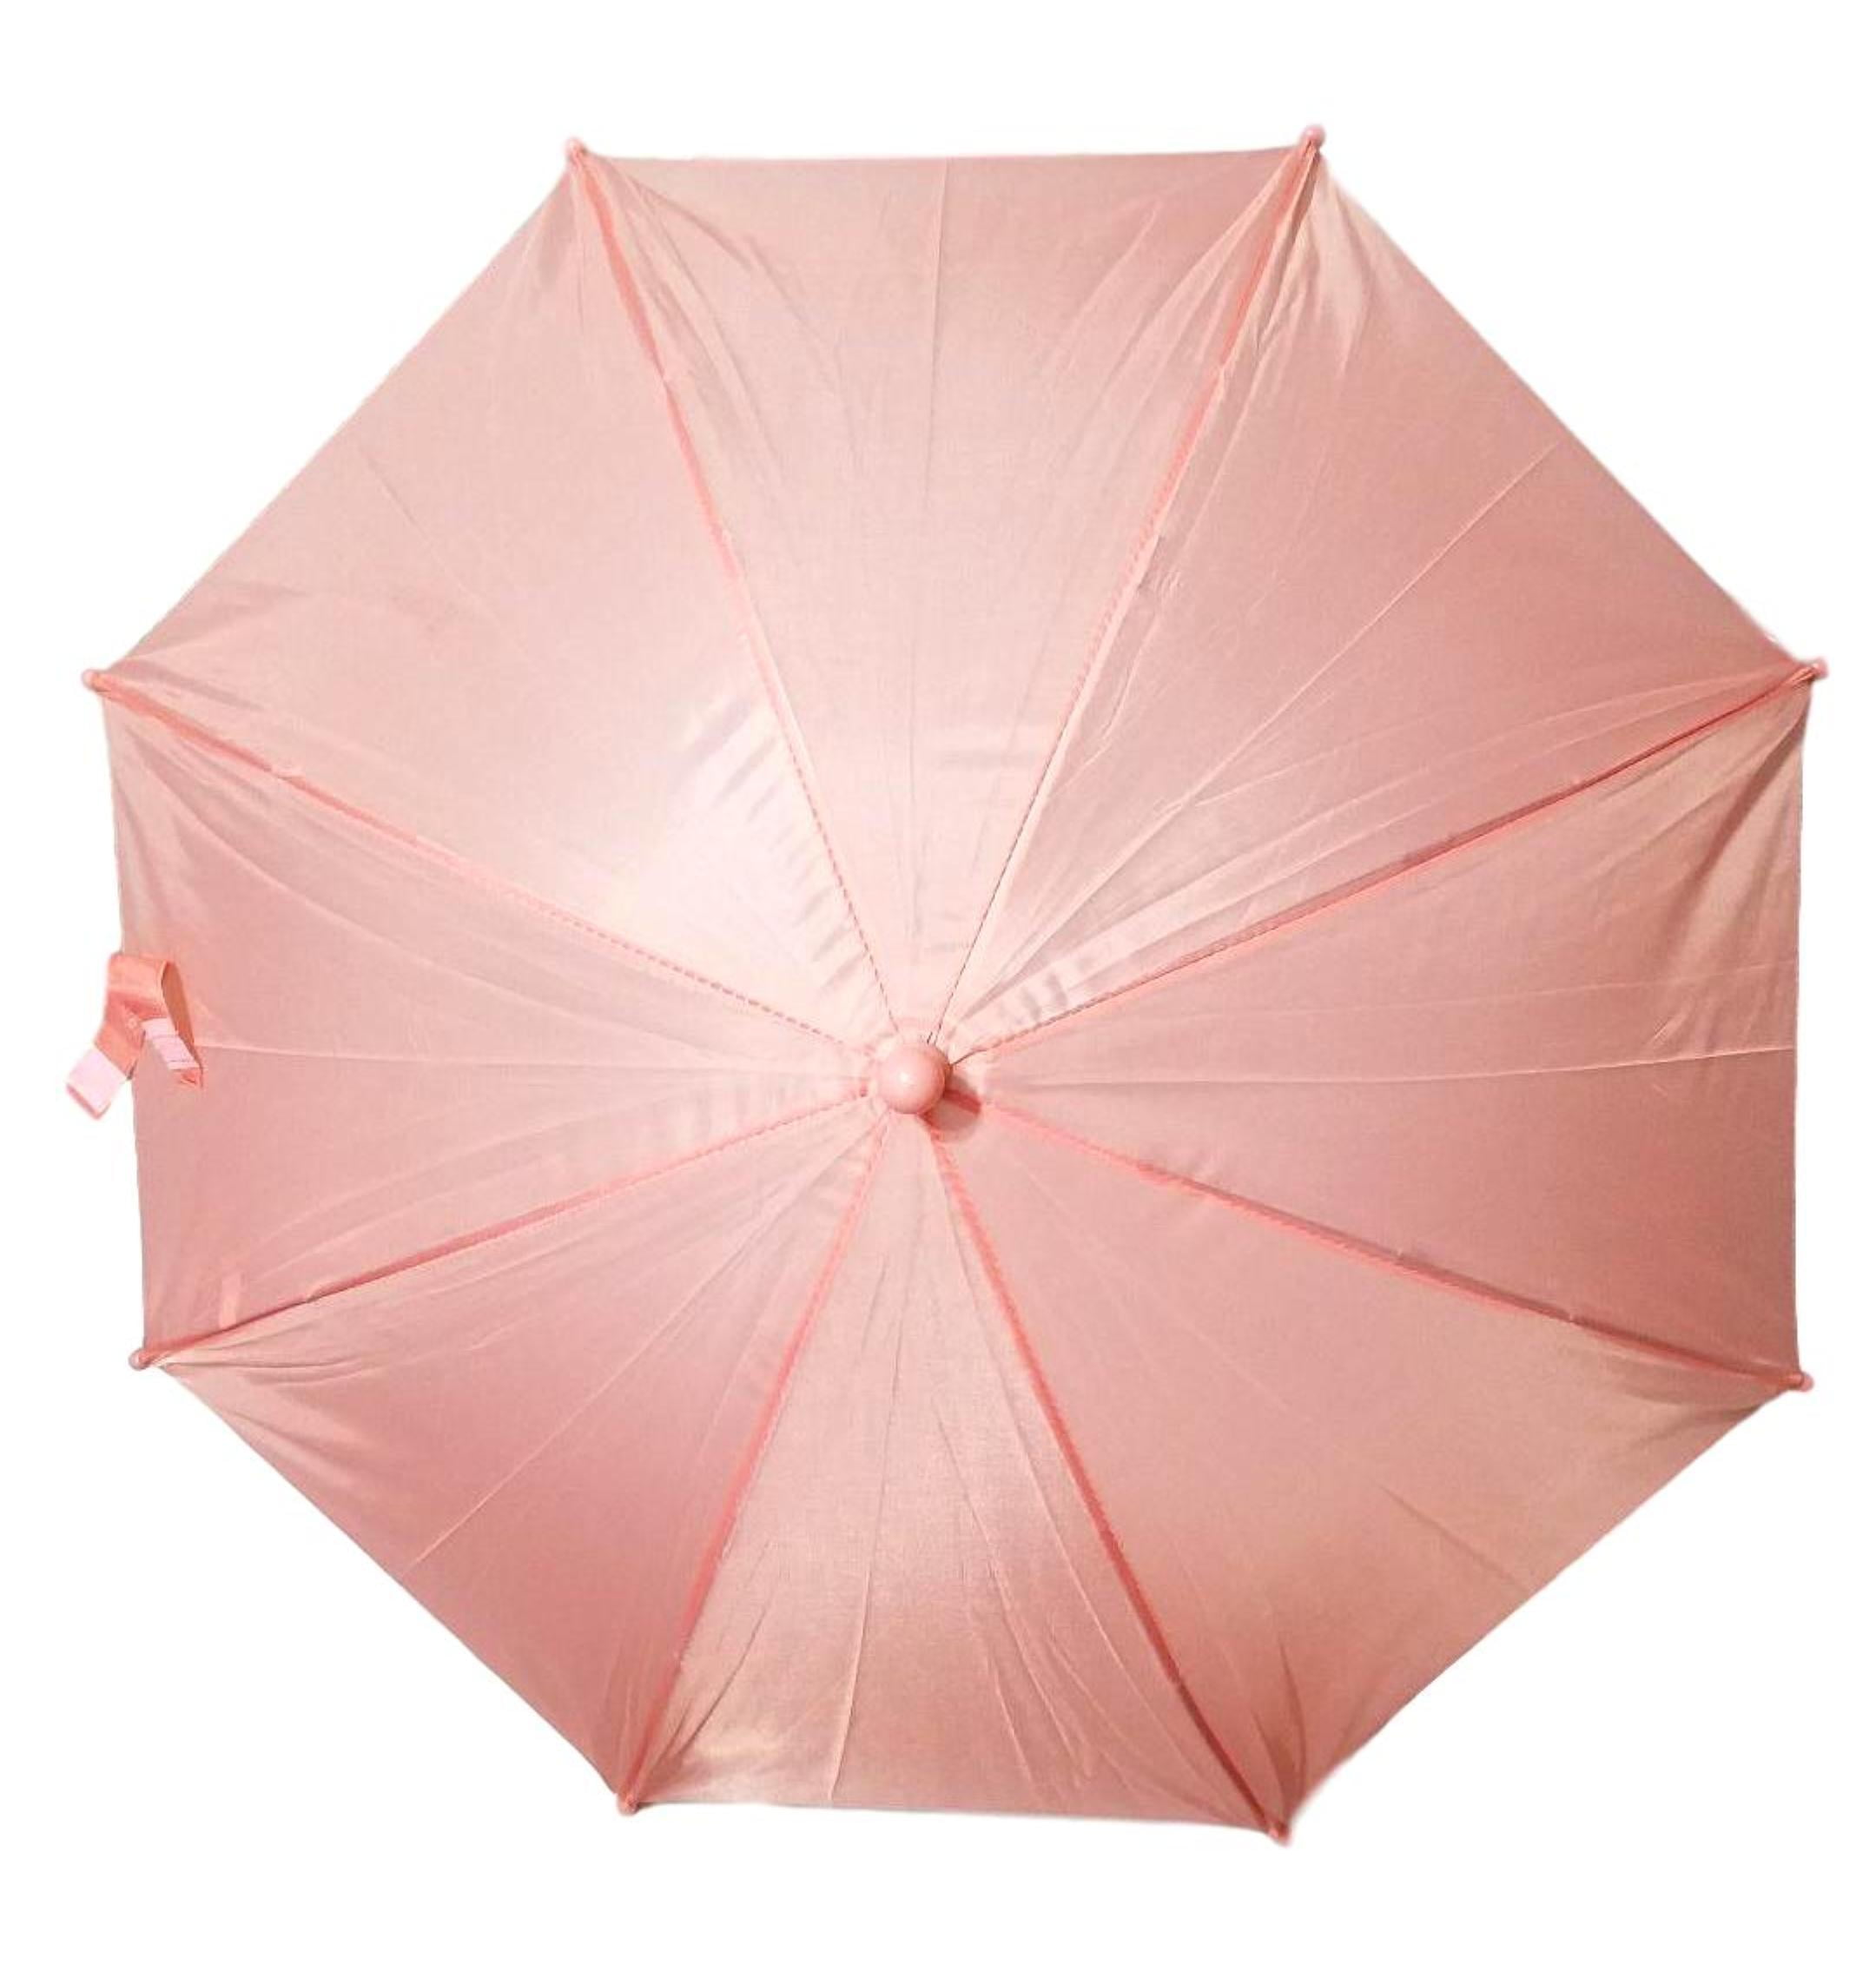 Second Line Parasol 16 or Kids Umbrella 